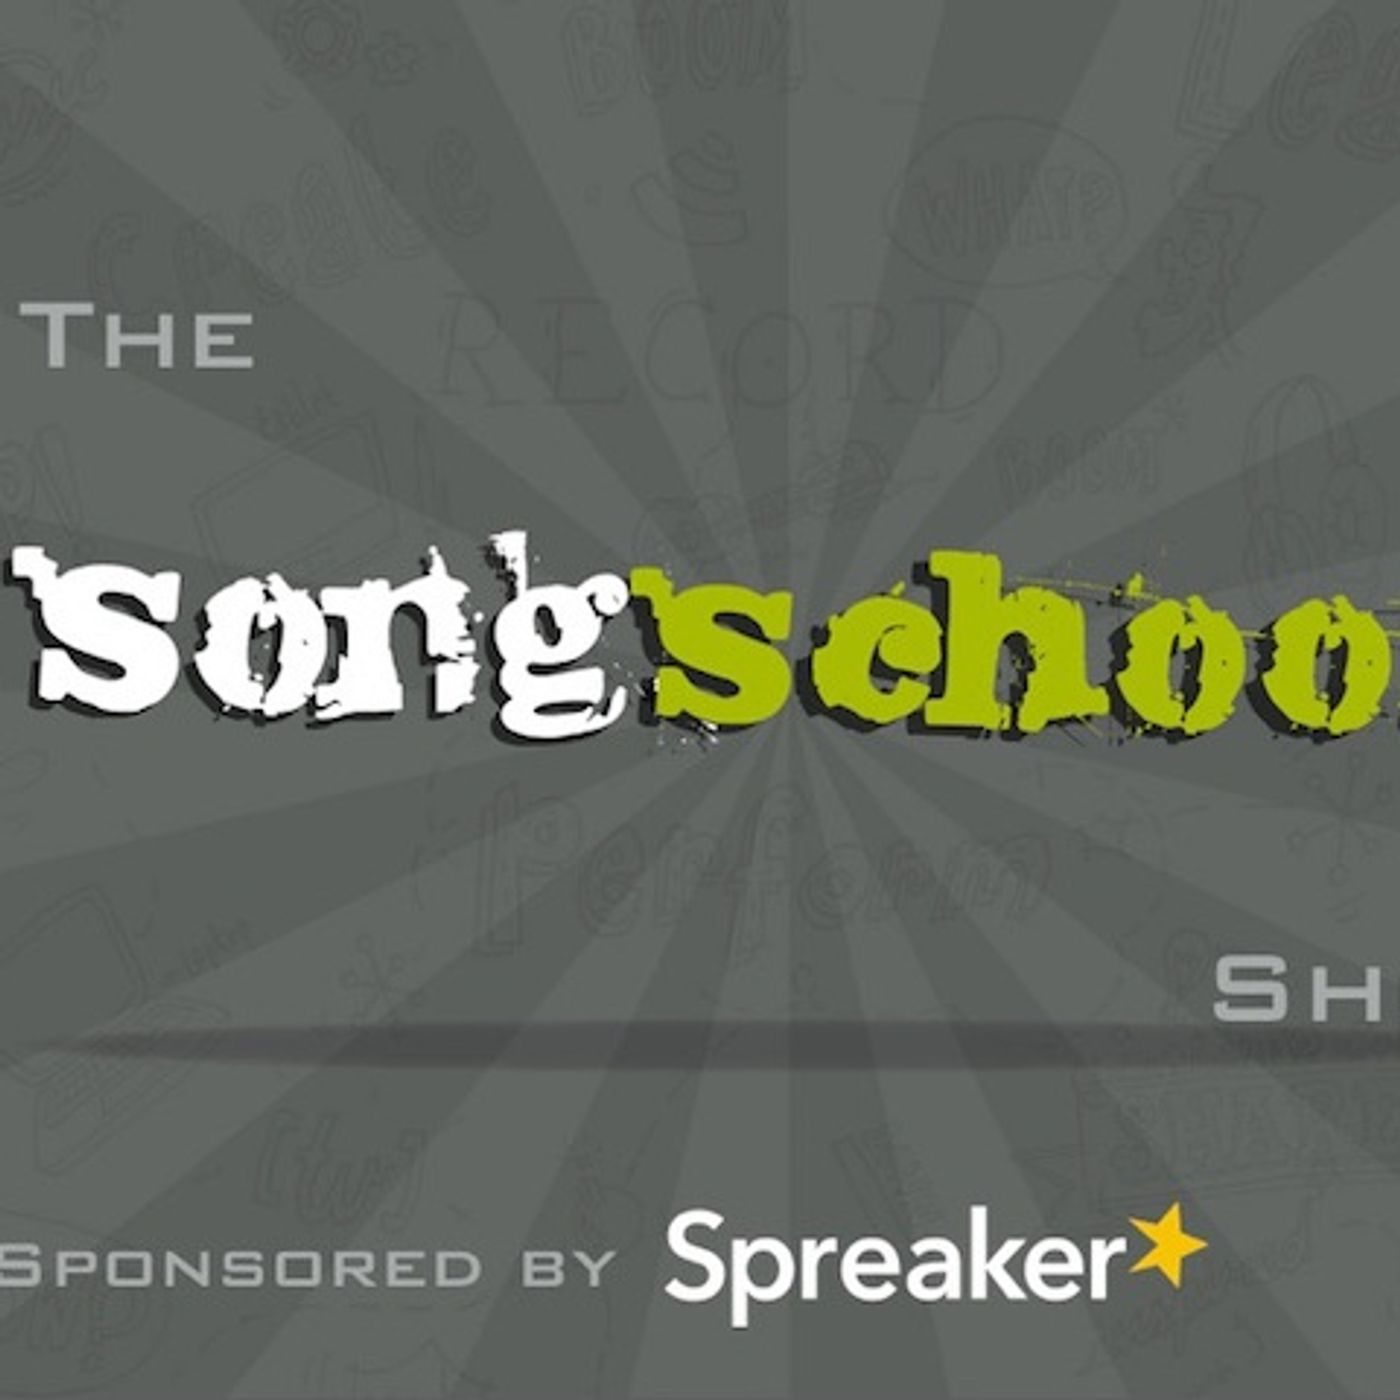 The Songschool Show @ CBS New Ross